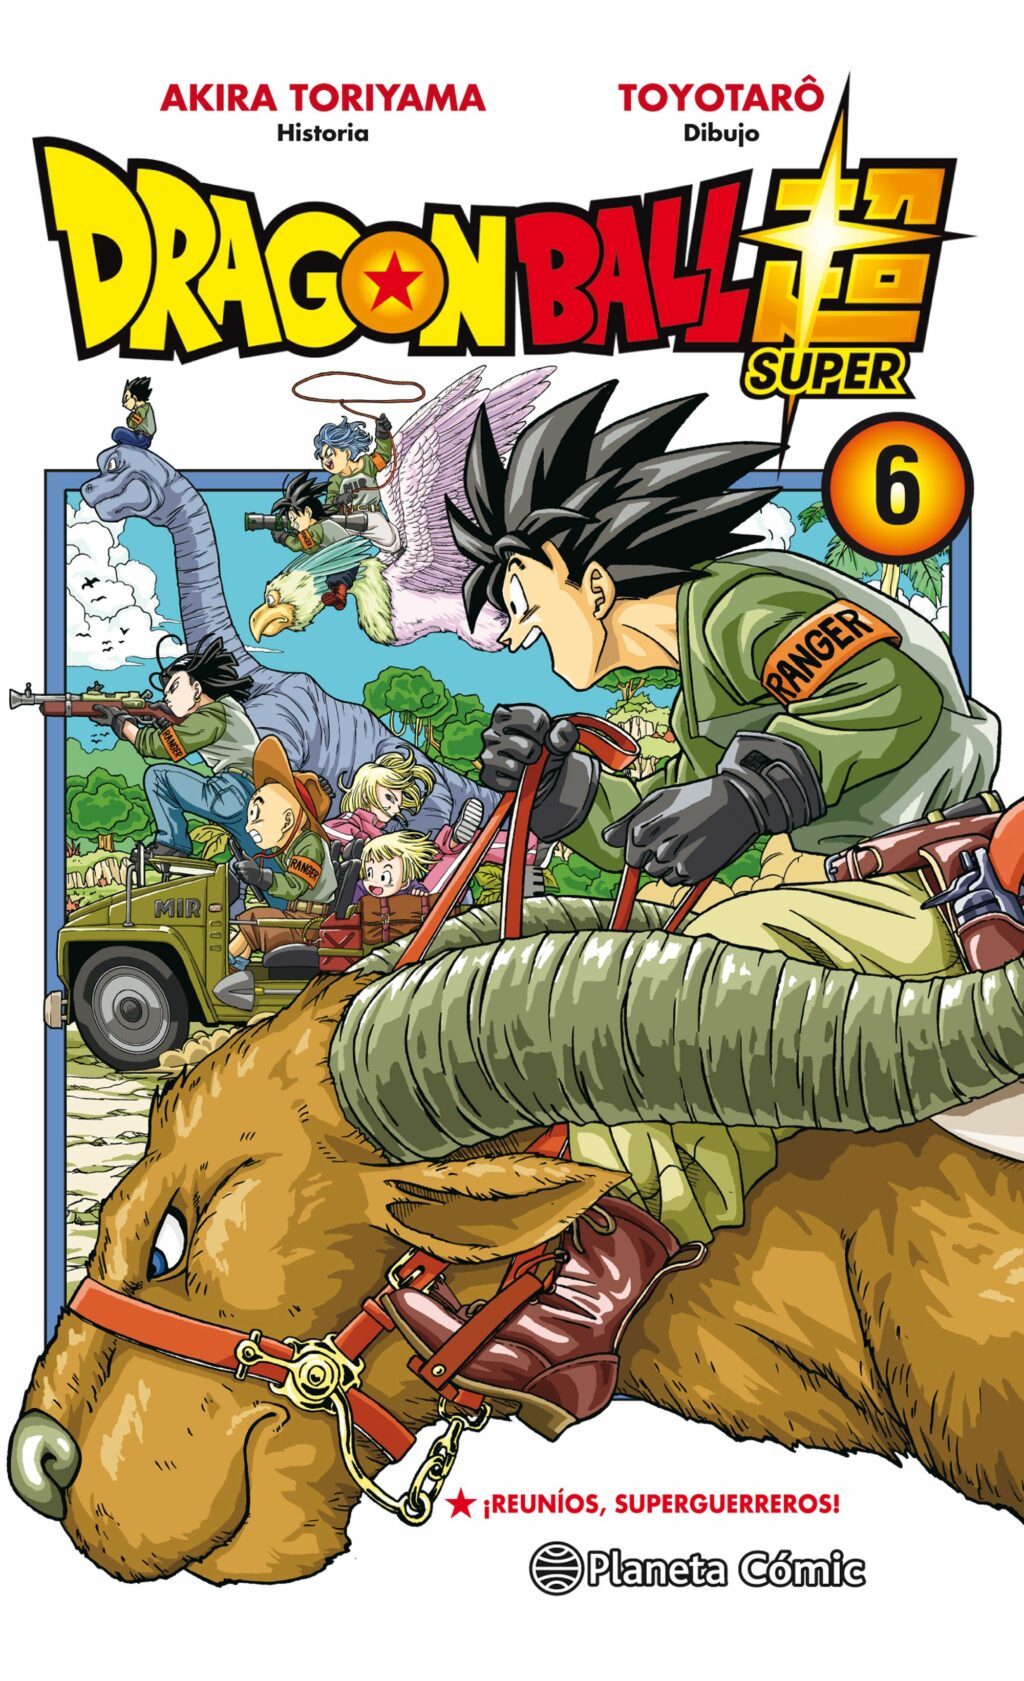 Reseña: Dragon Ball Super #6 (Toriyama y Toyotaro) | Reserva de Maná